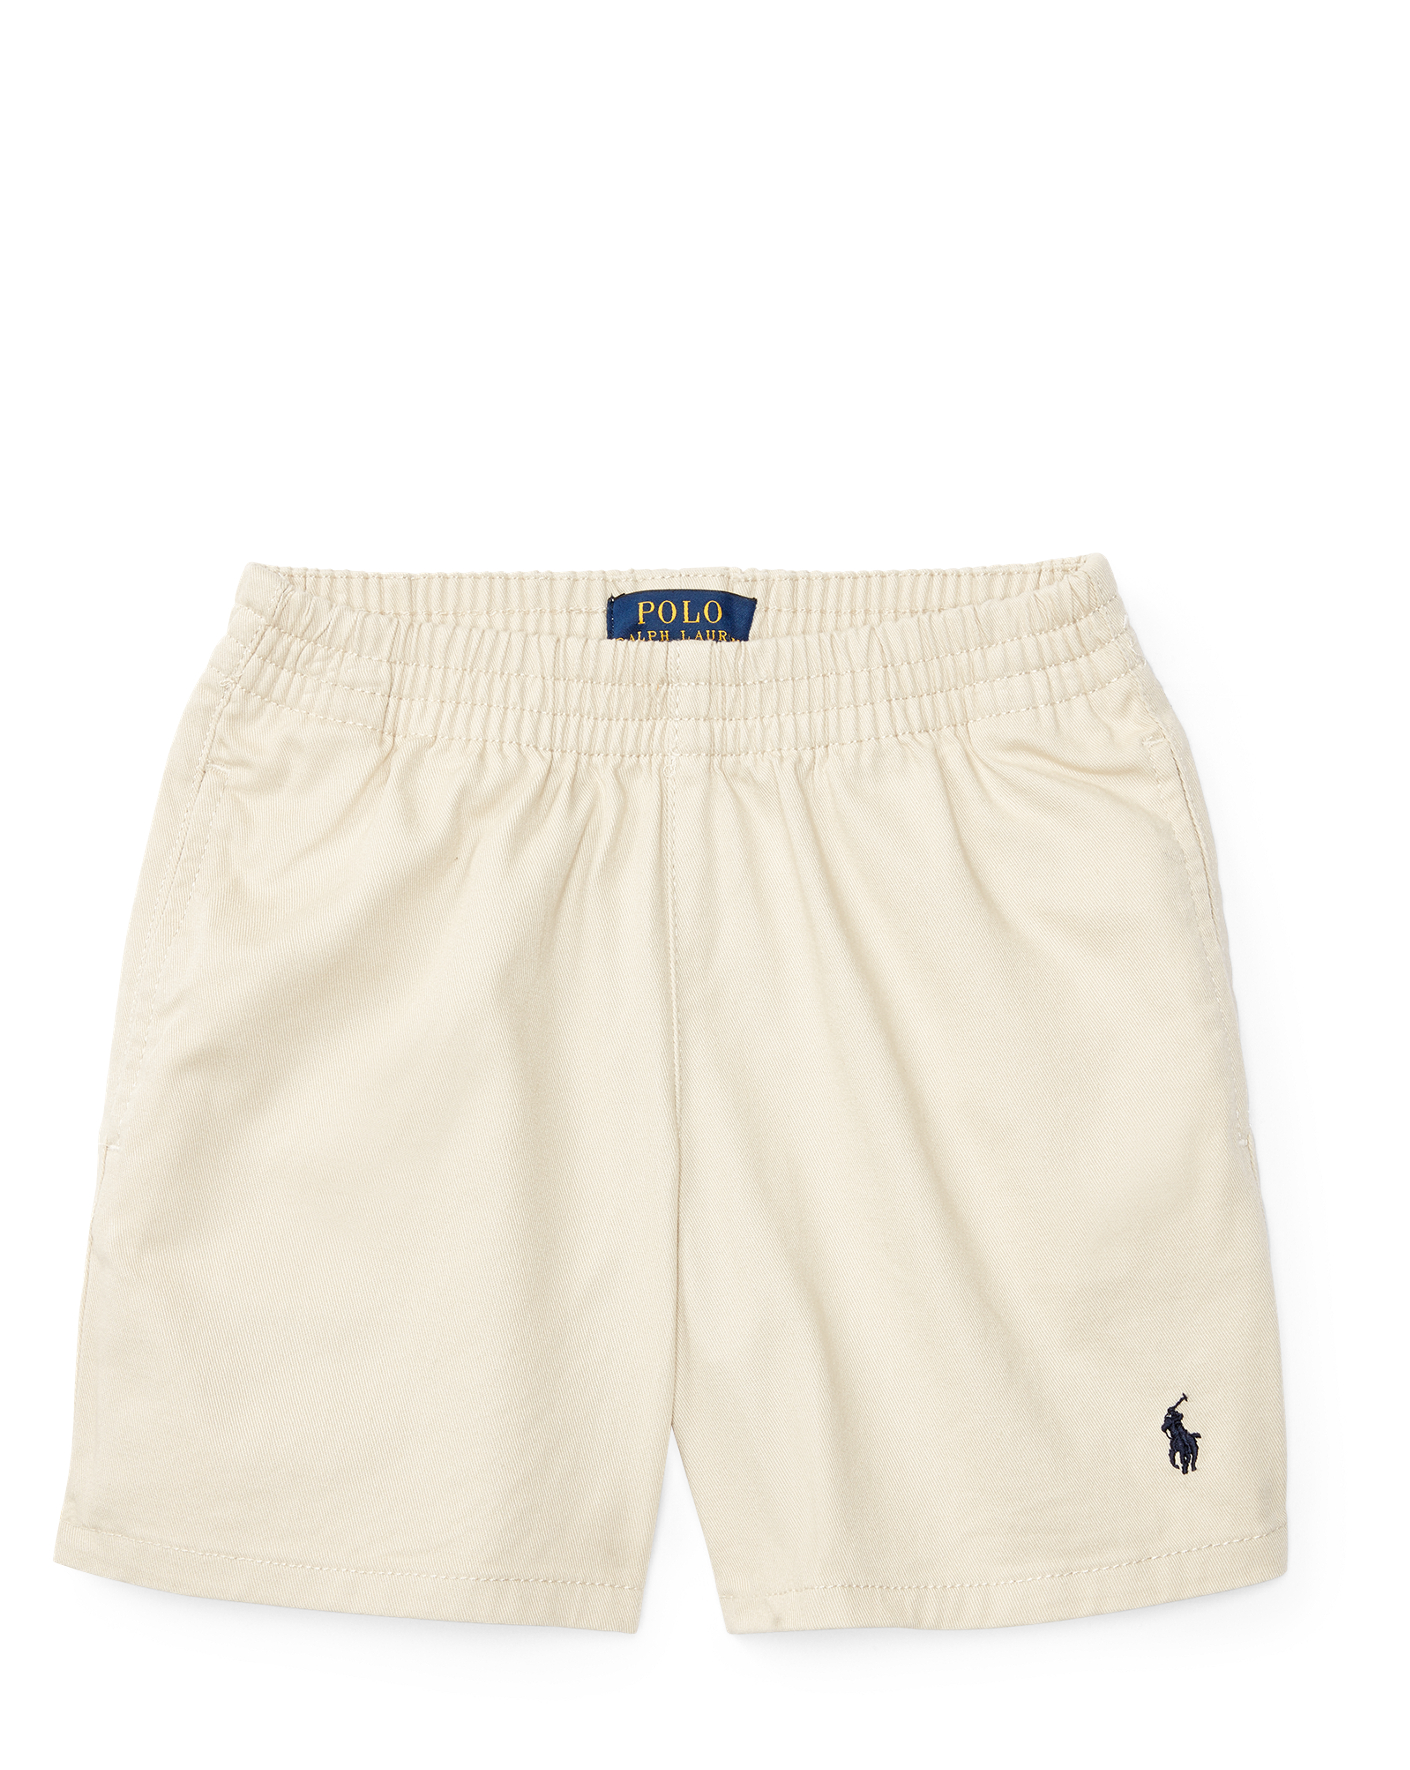 Cotton Pull-On Chino Short - Shorts Boys' 2-7 - RalphLauren.com